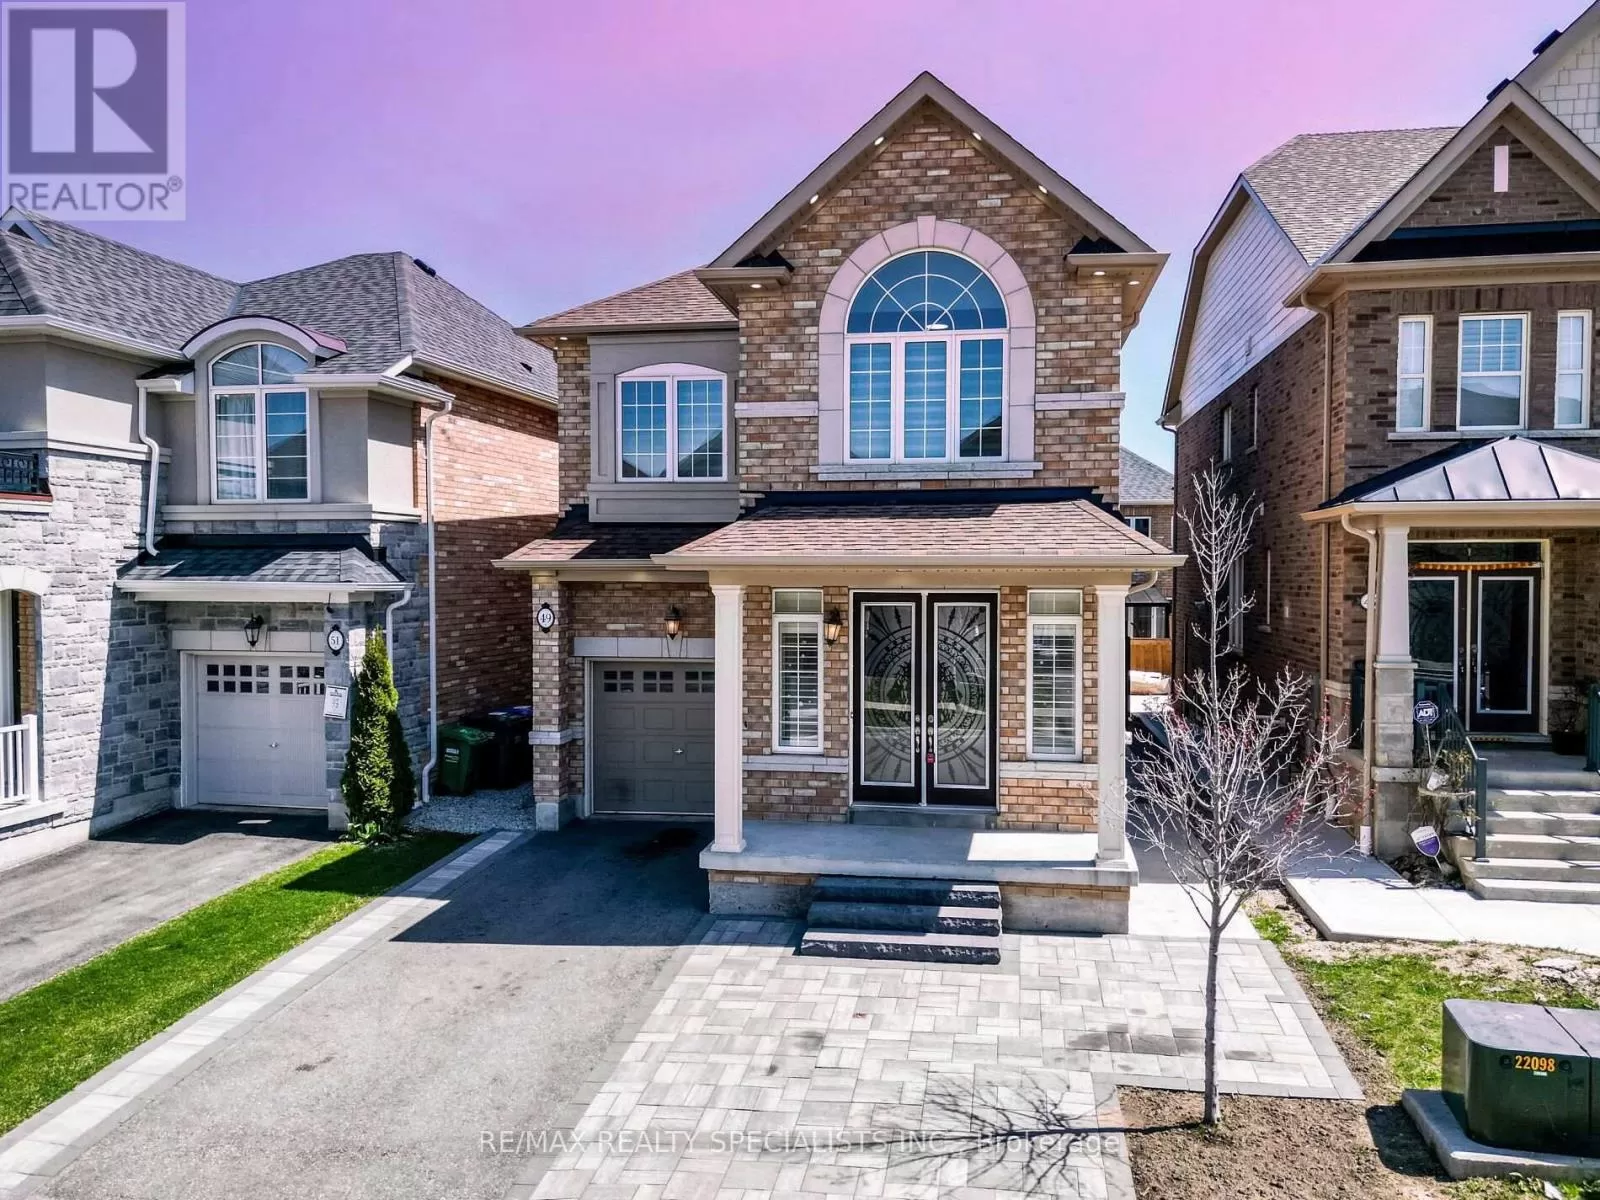 House for rent: 49 Rangemore Rd, Brampton, Ontario L7A 4V7